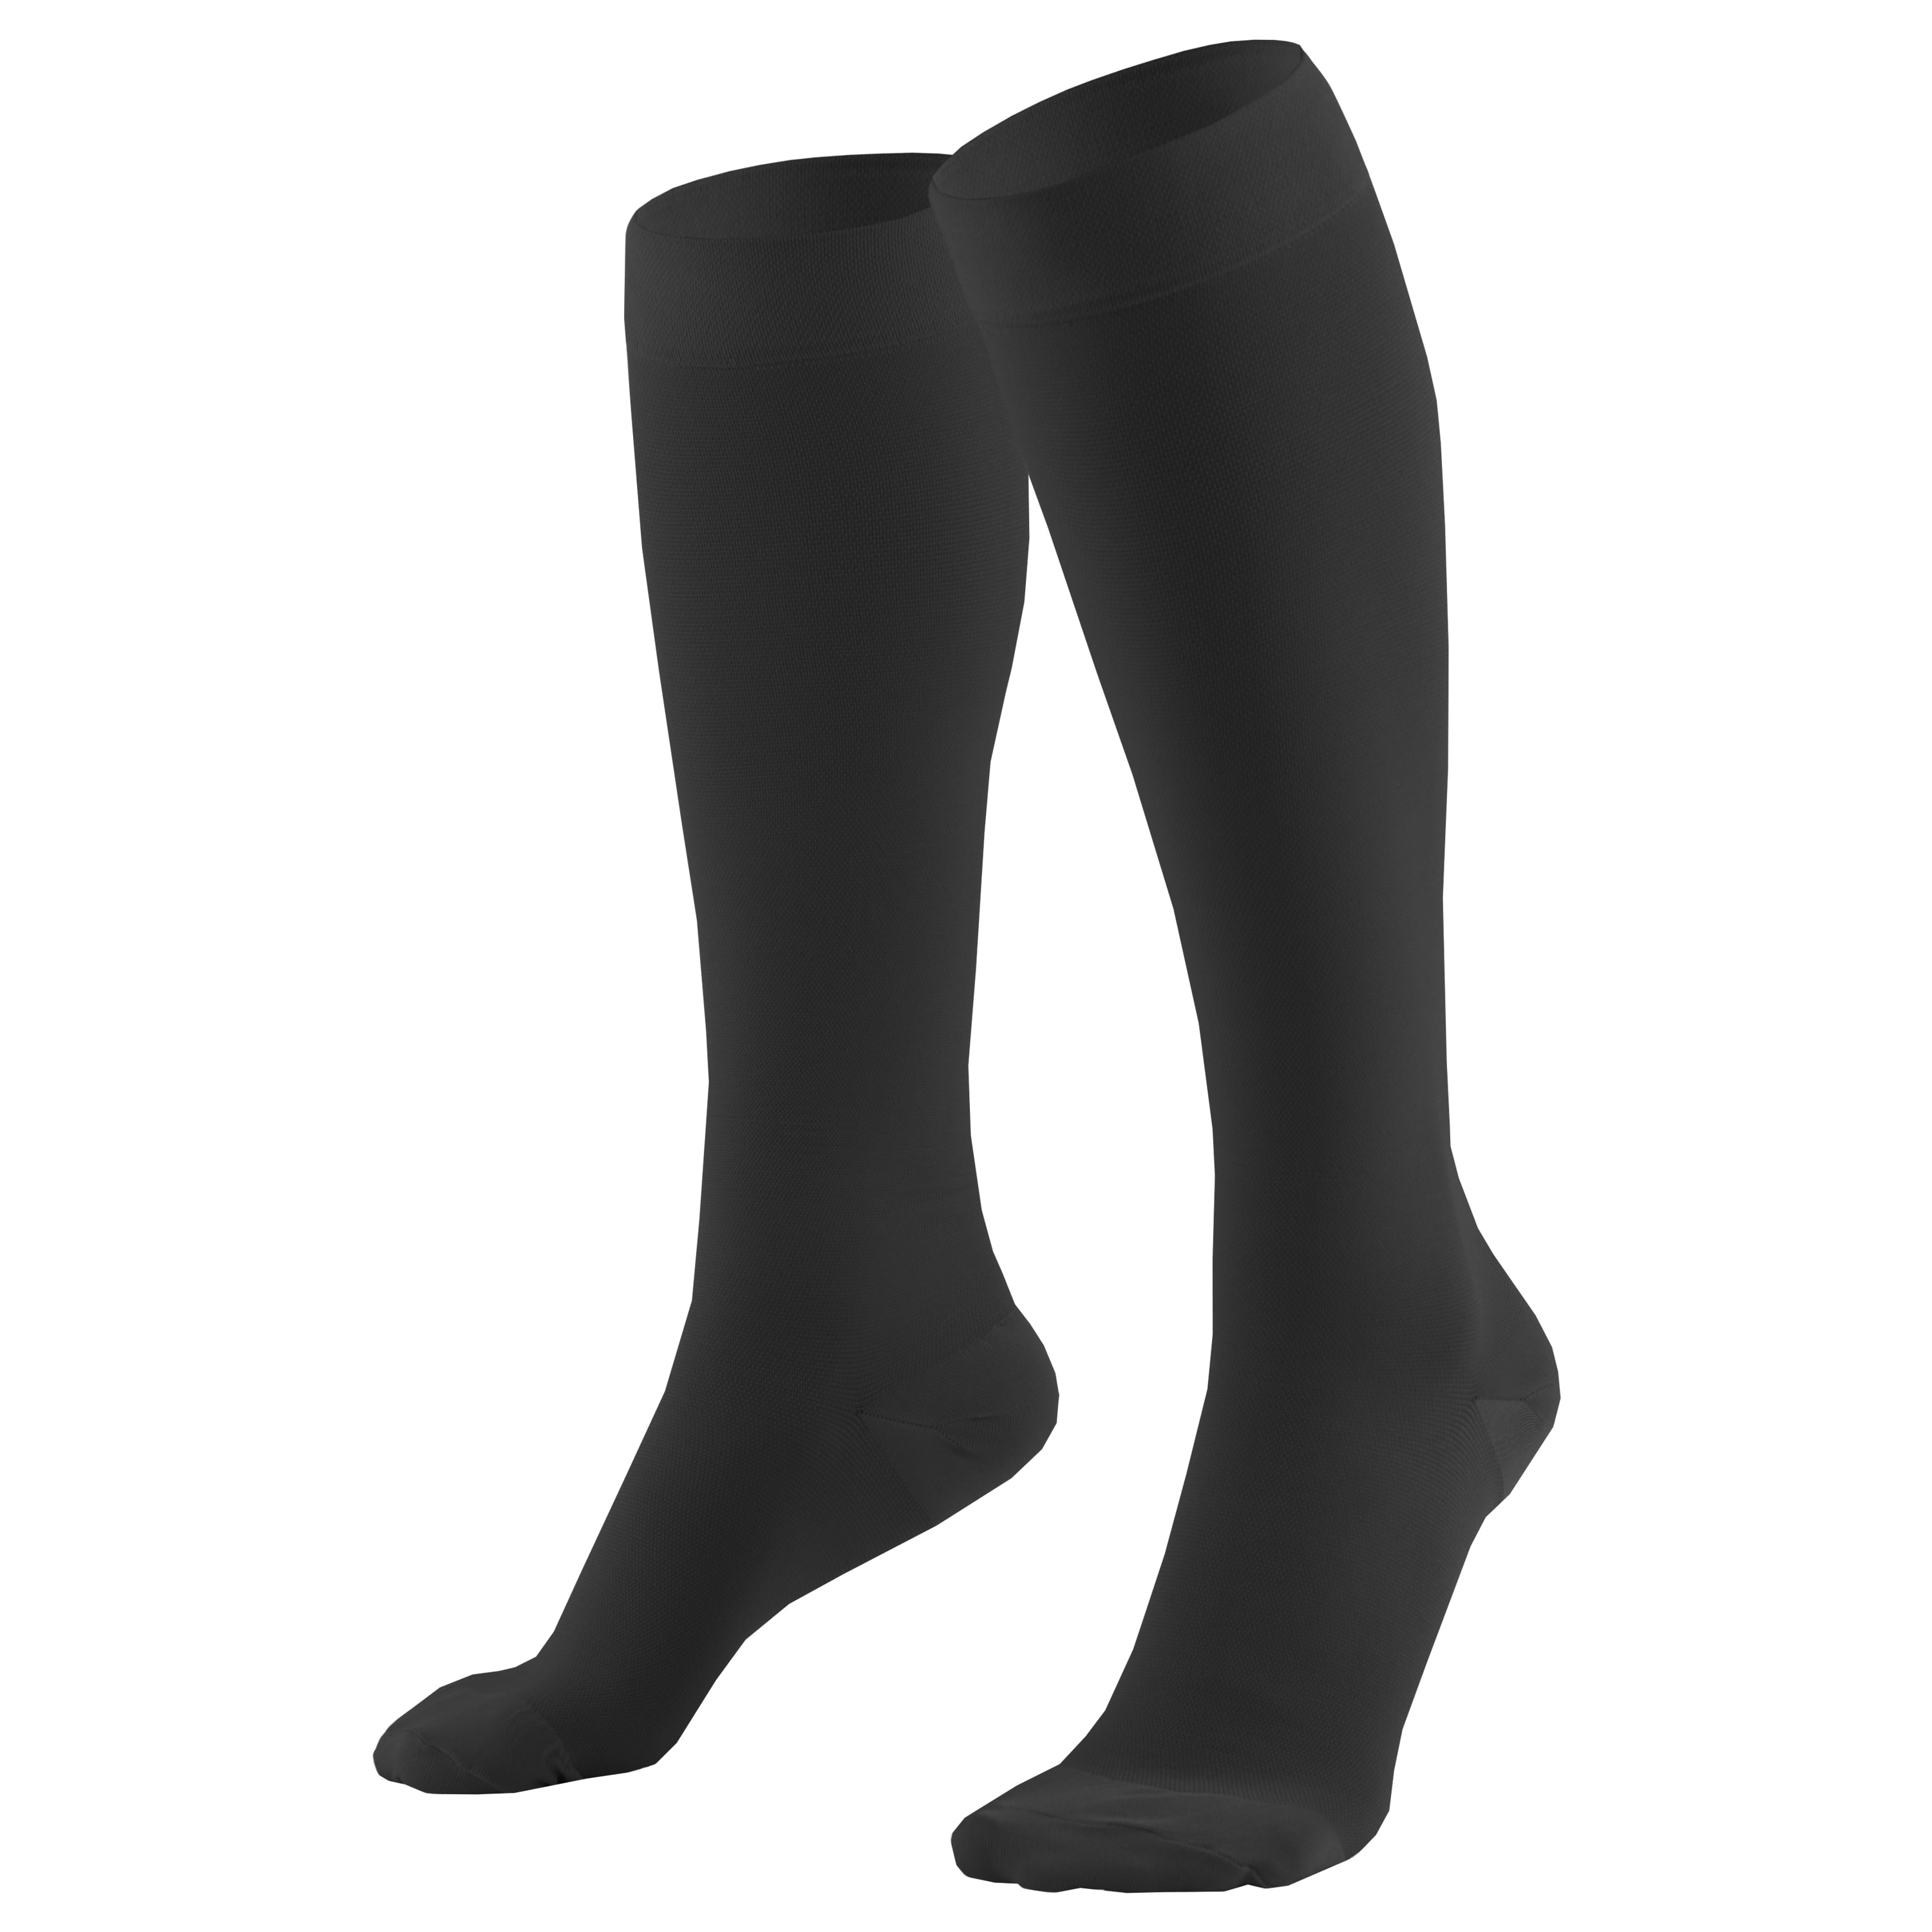 Truform Firm Strength Compression Socks, Knee High, Closed Toe, Black, Medium